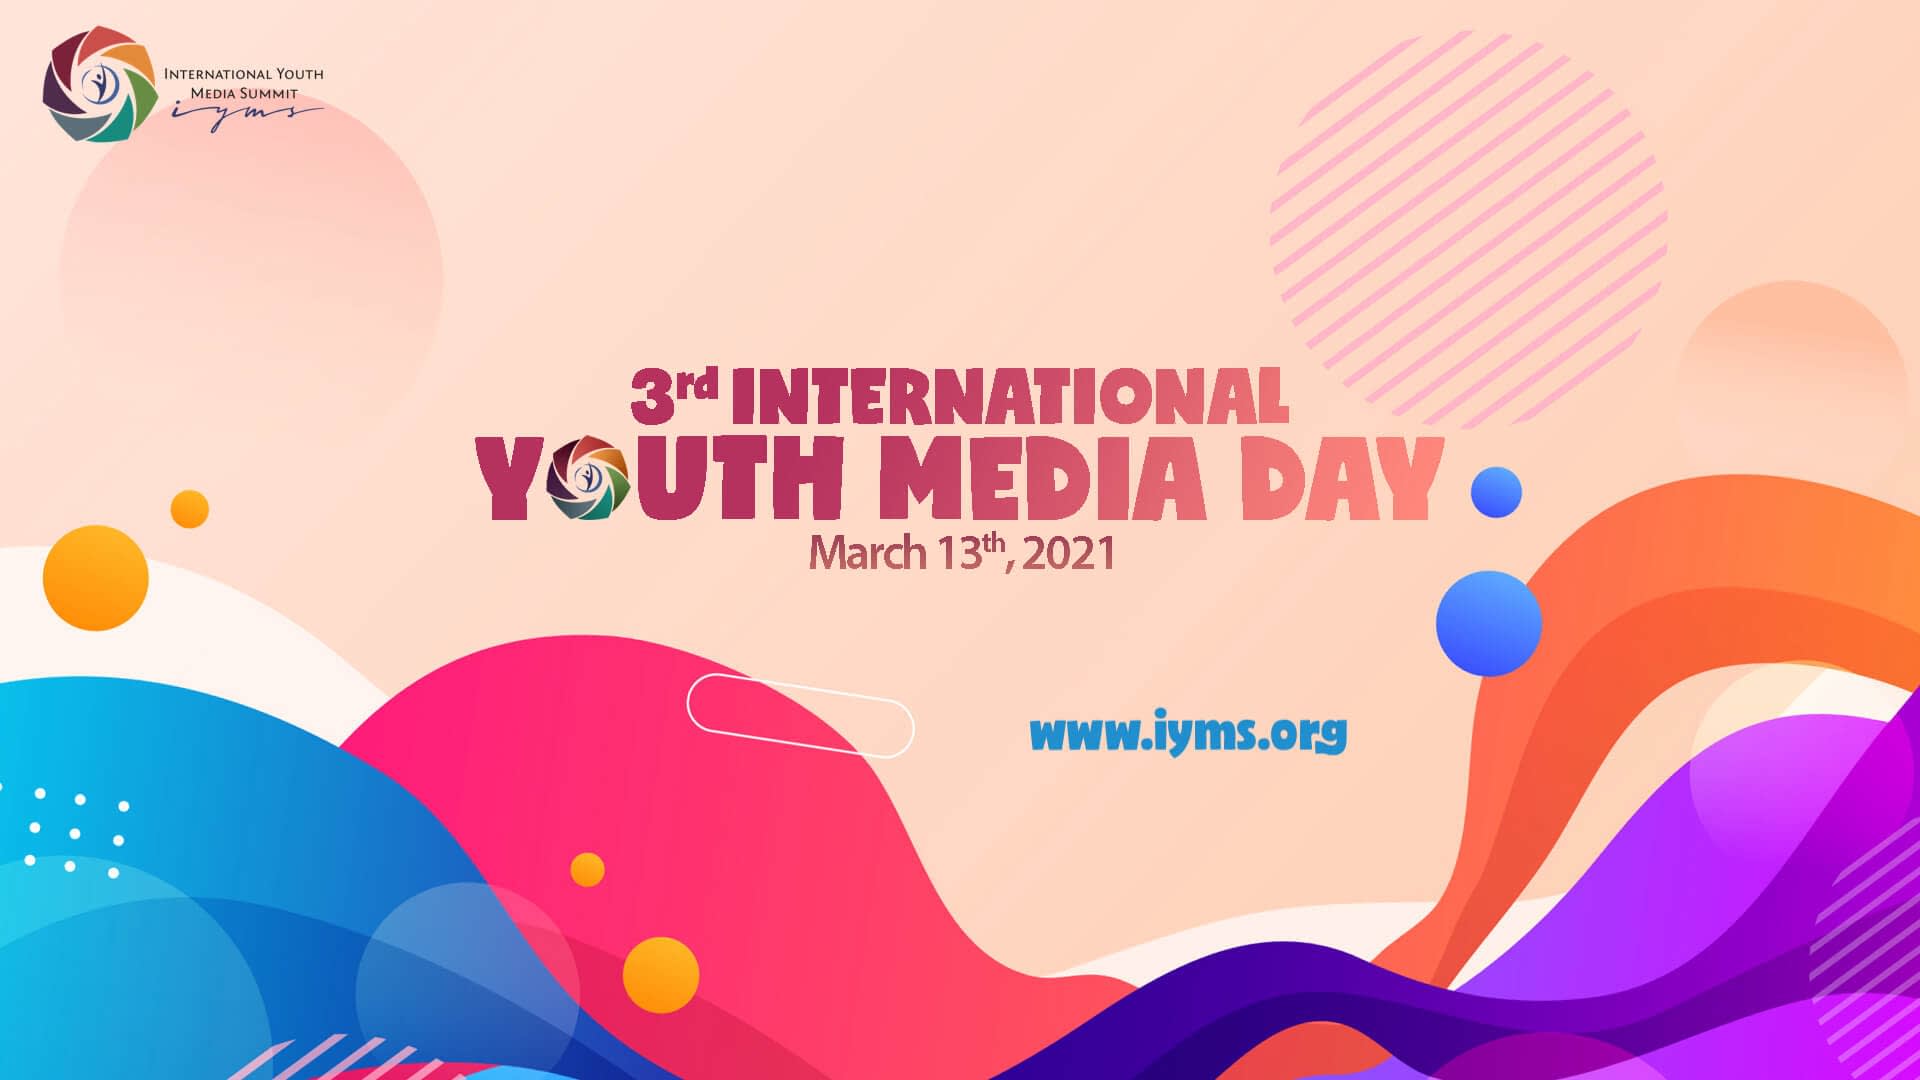 Virtual celebration of the 3rd International Youth Media Day